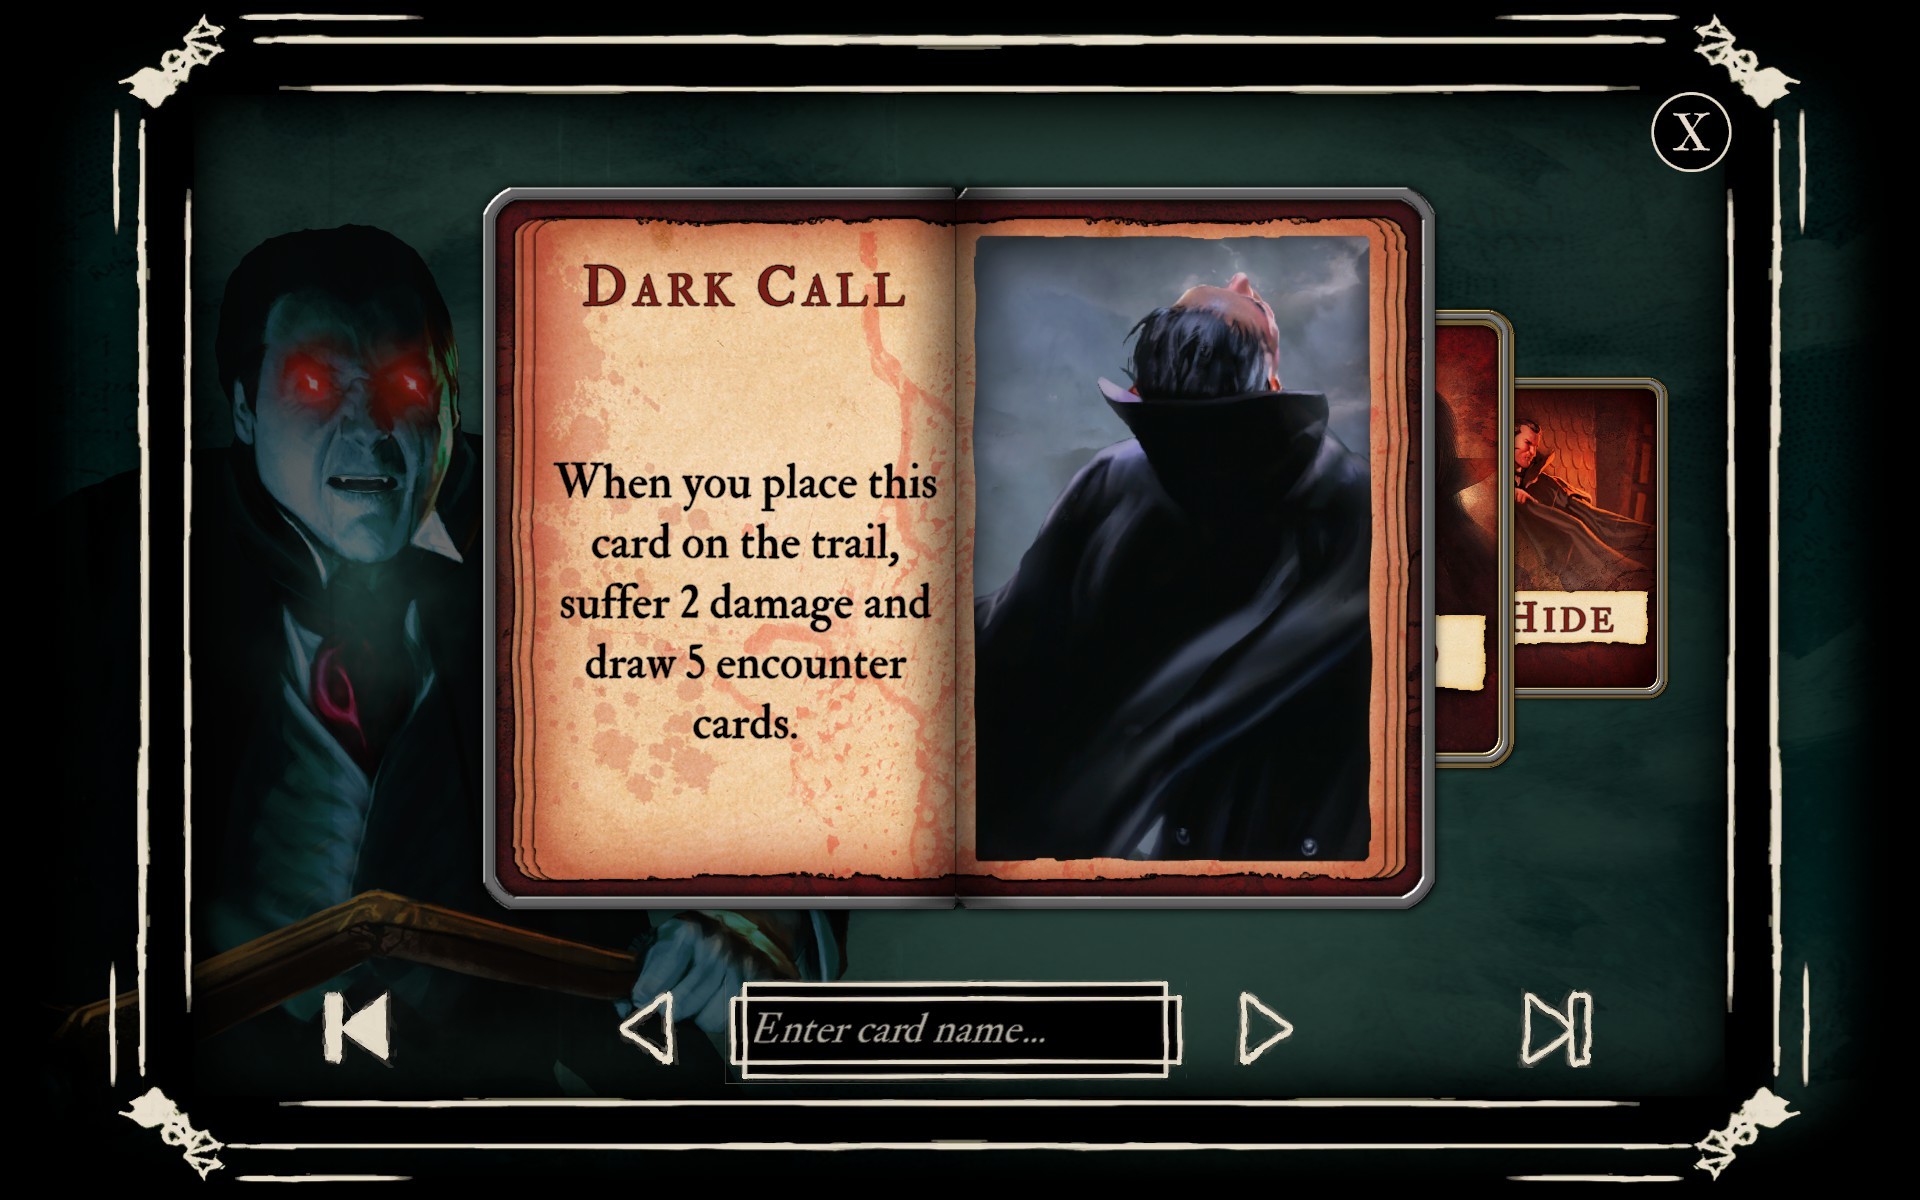 Fury of Dracula: Digital Edition screenshot